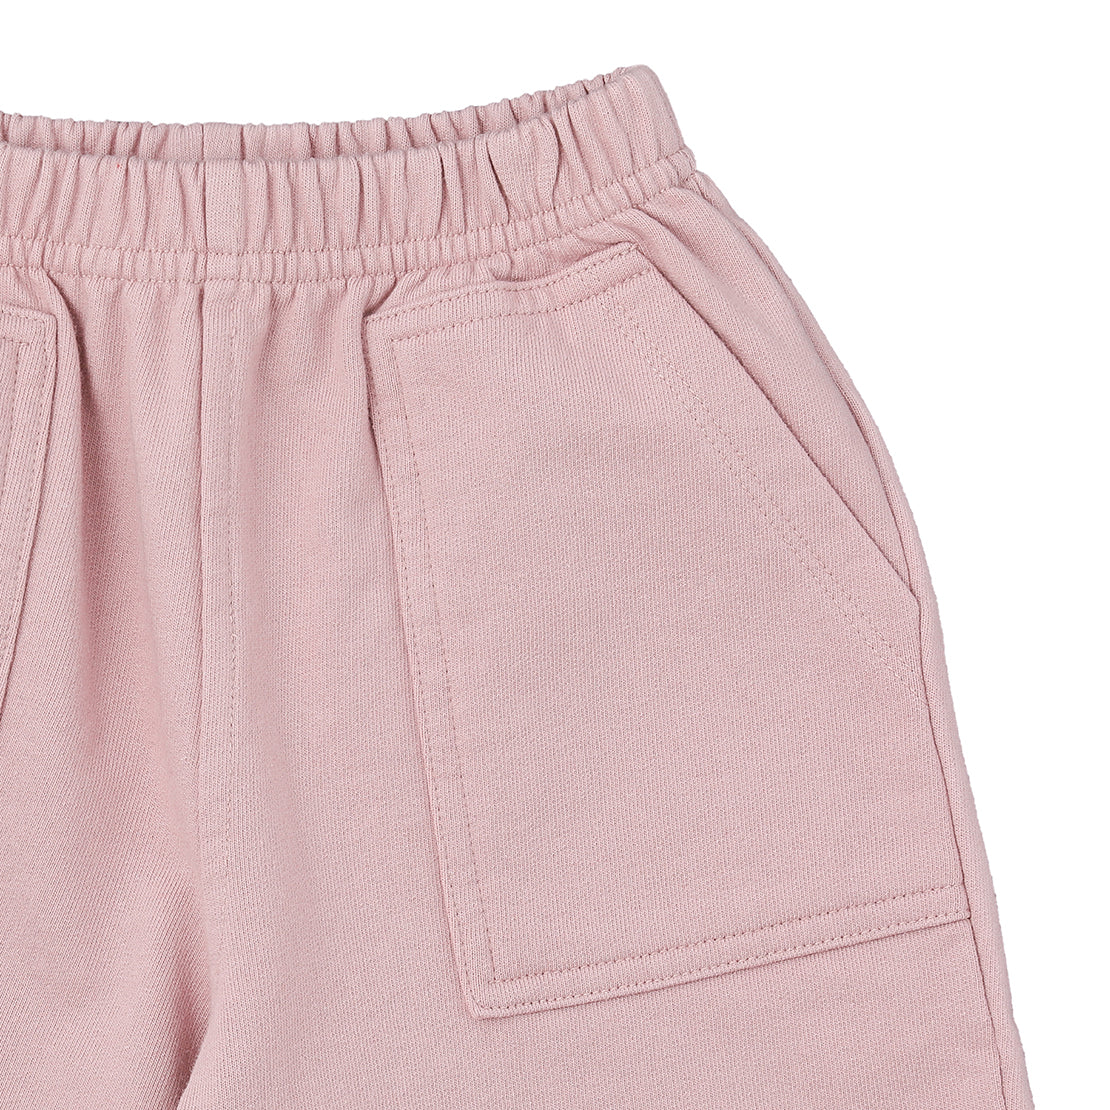 BREEZE POCKET Summer Shorts Pink